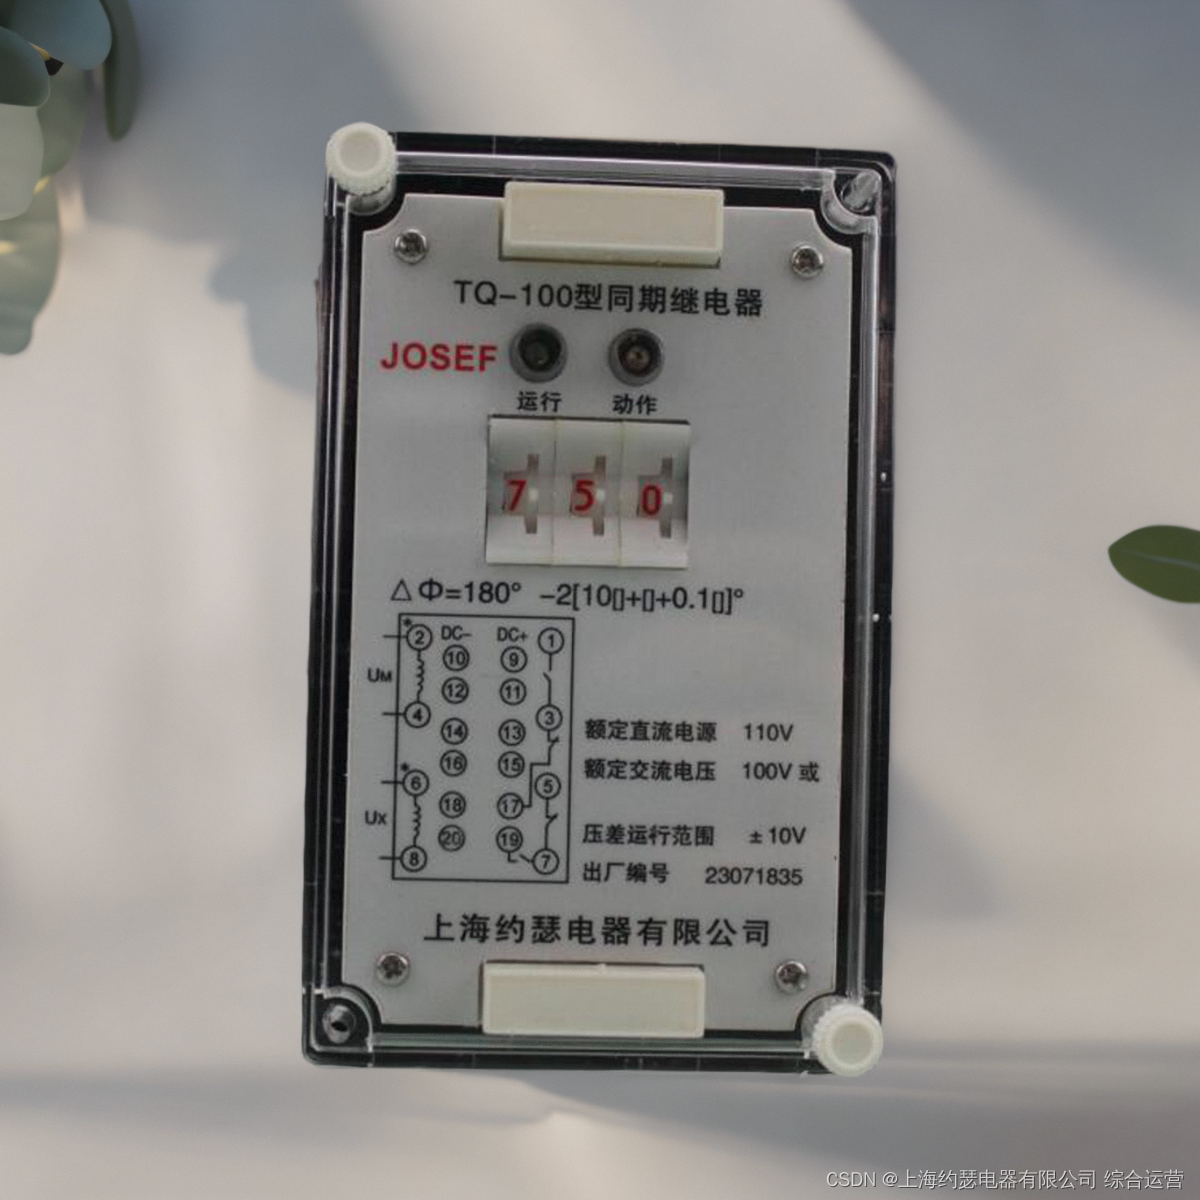 JOSEF约瑟 TQ-100同期继电器 额定直流电压220V 交流电压100V±10V